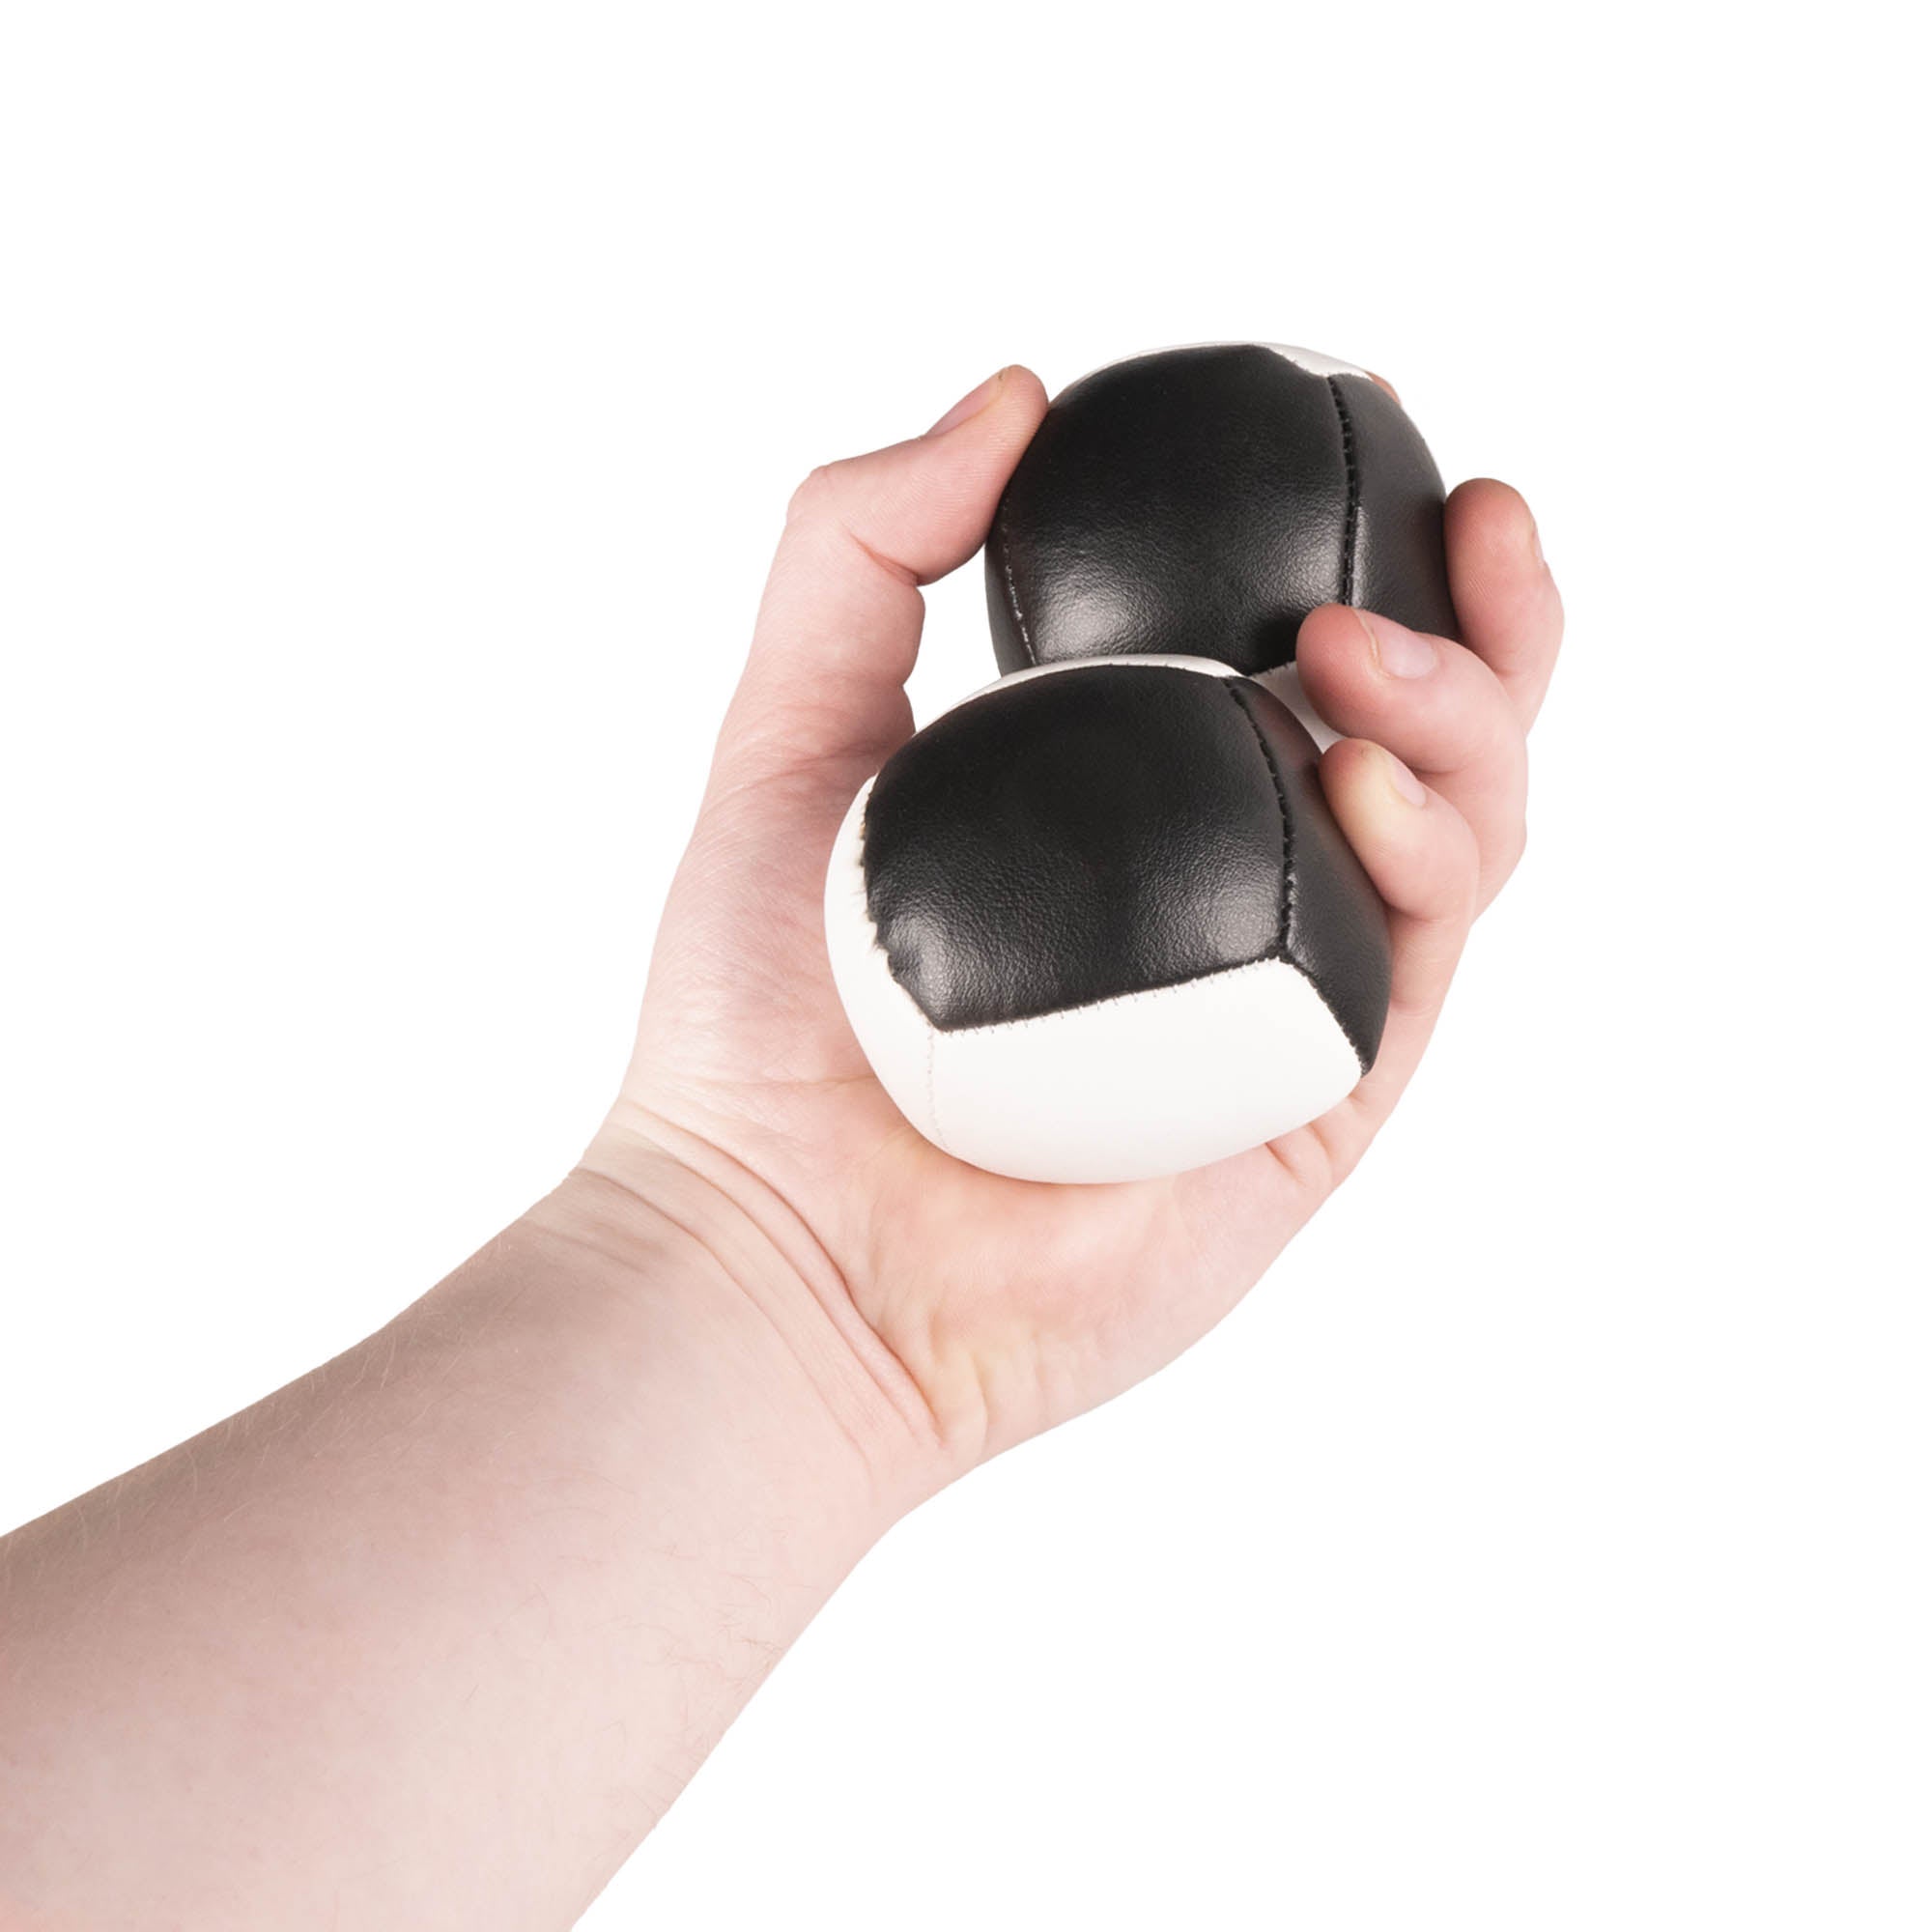 Firetoys two black/white 110g thud juggling balls in hand